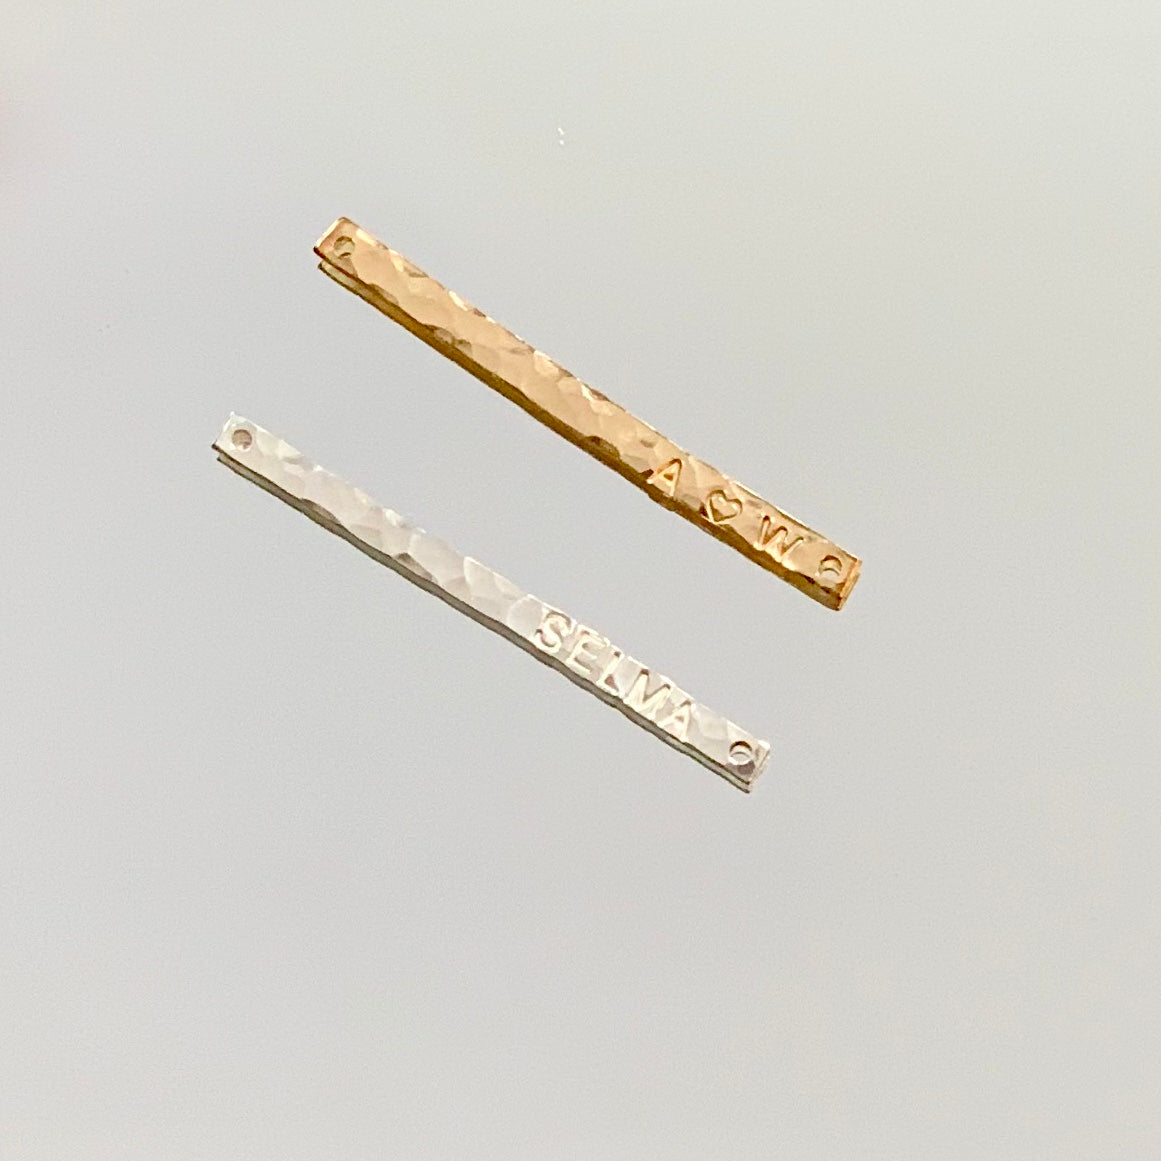 Ultra minimalist bracelet - personalized tiny bar